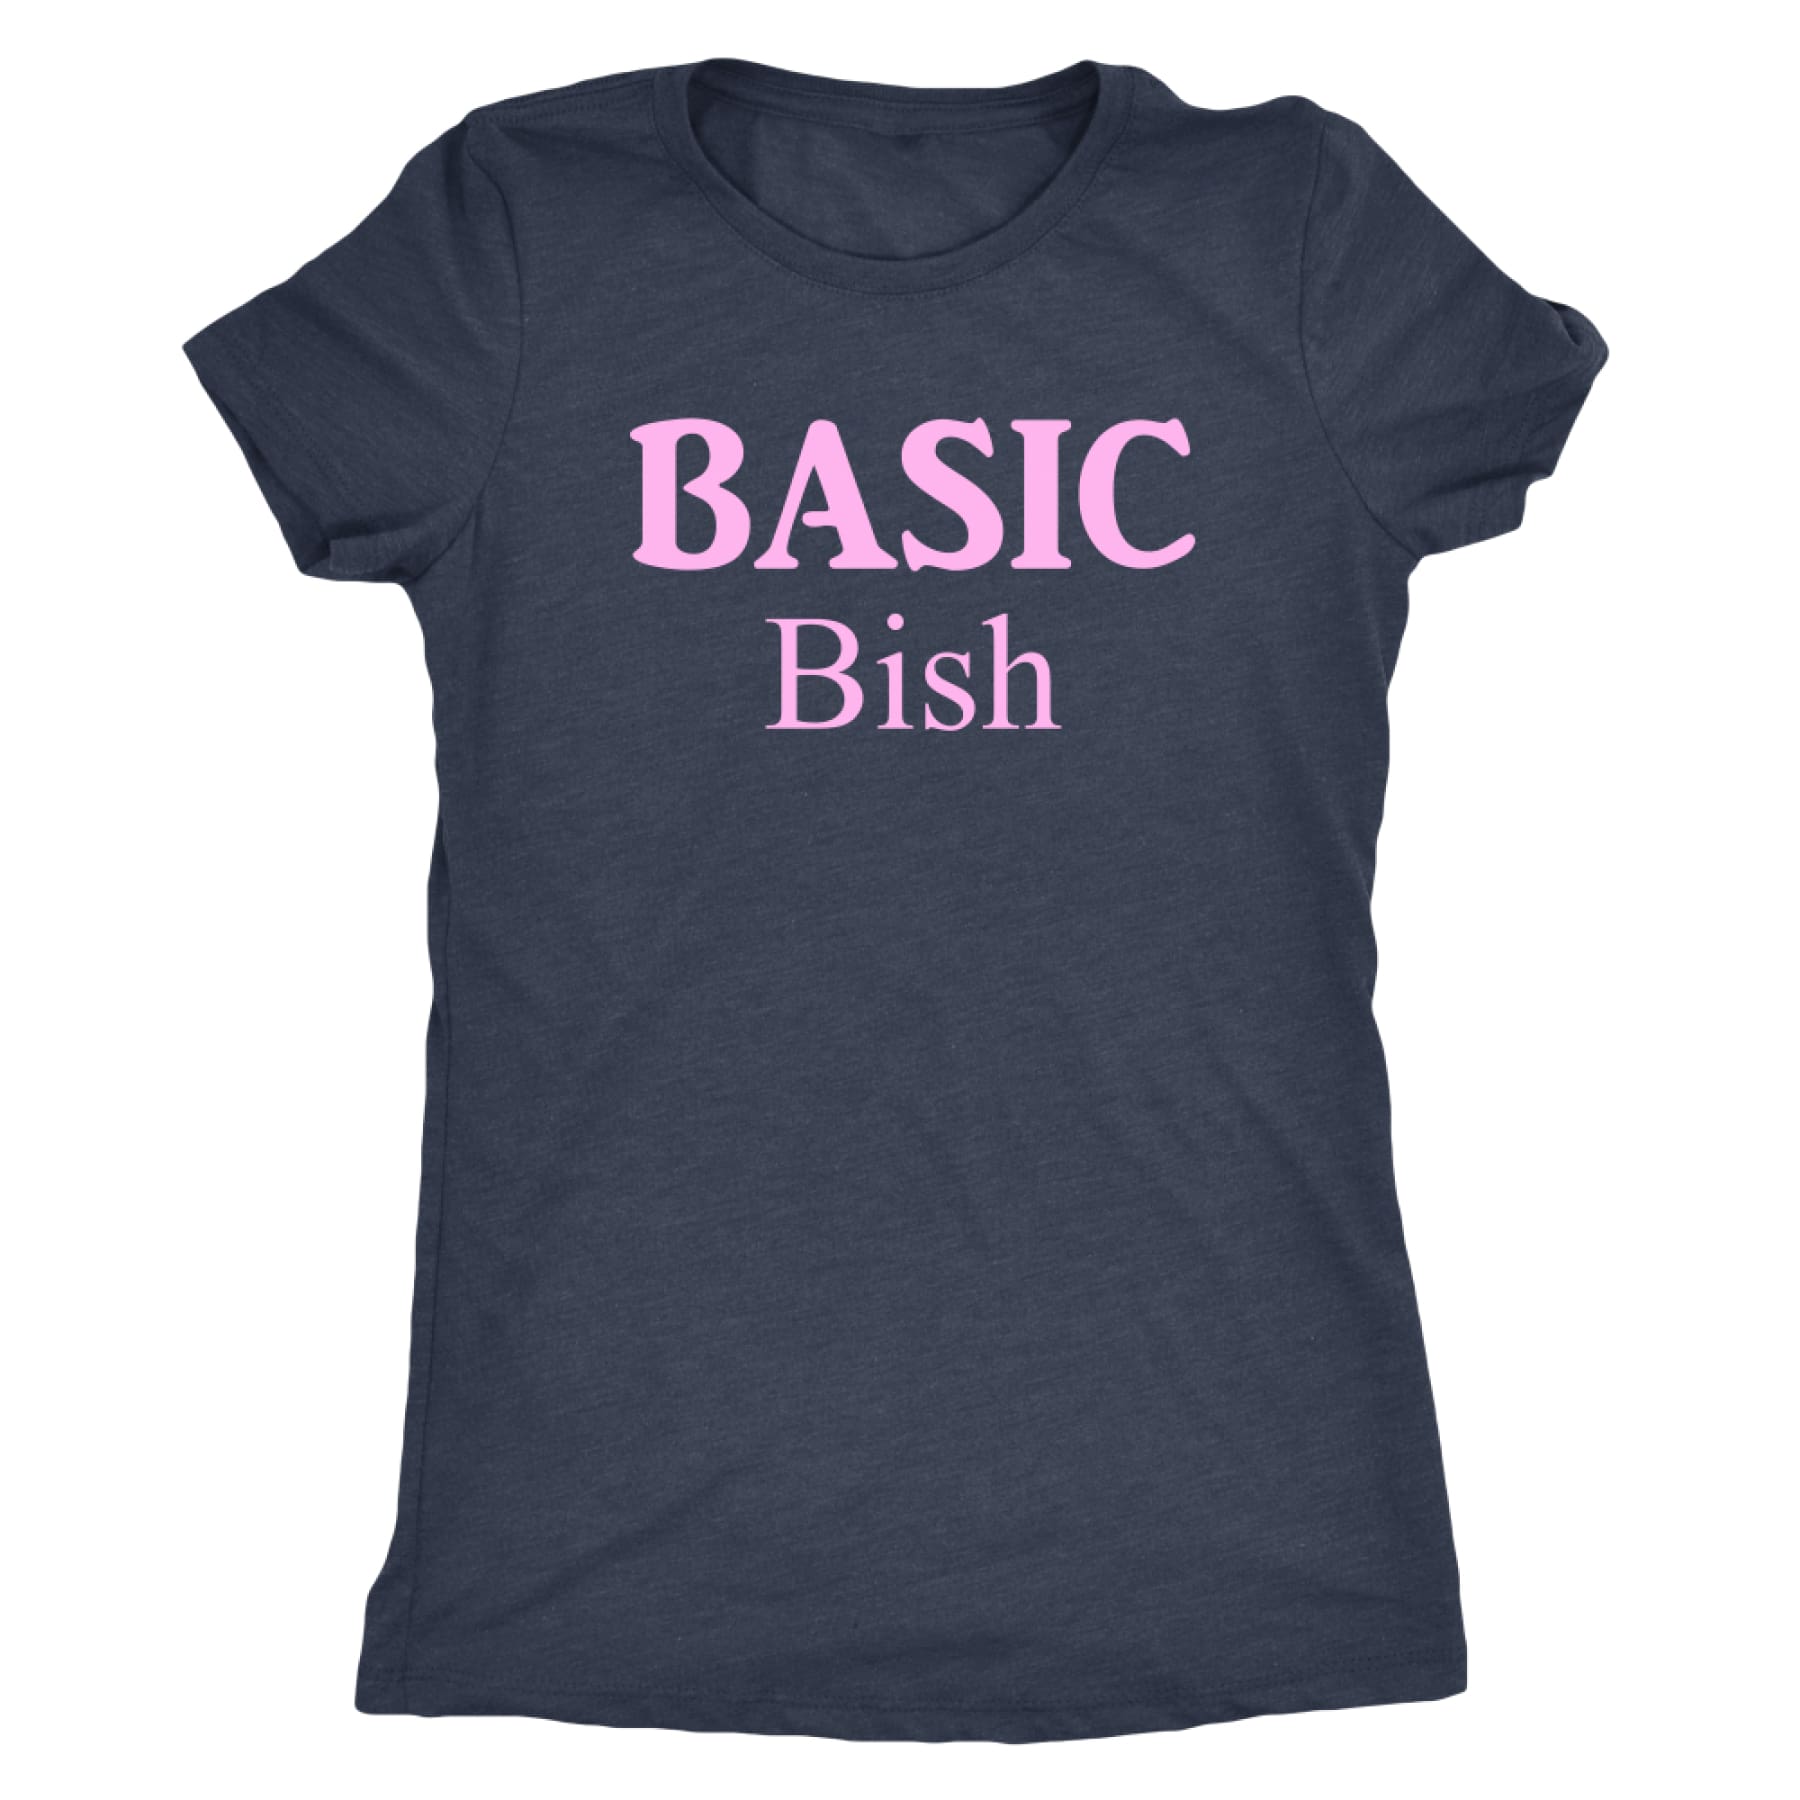 Basic Bish Tee,T-shirt - Dirt Road Divas Boutique